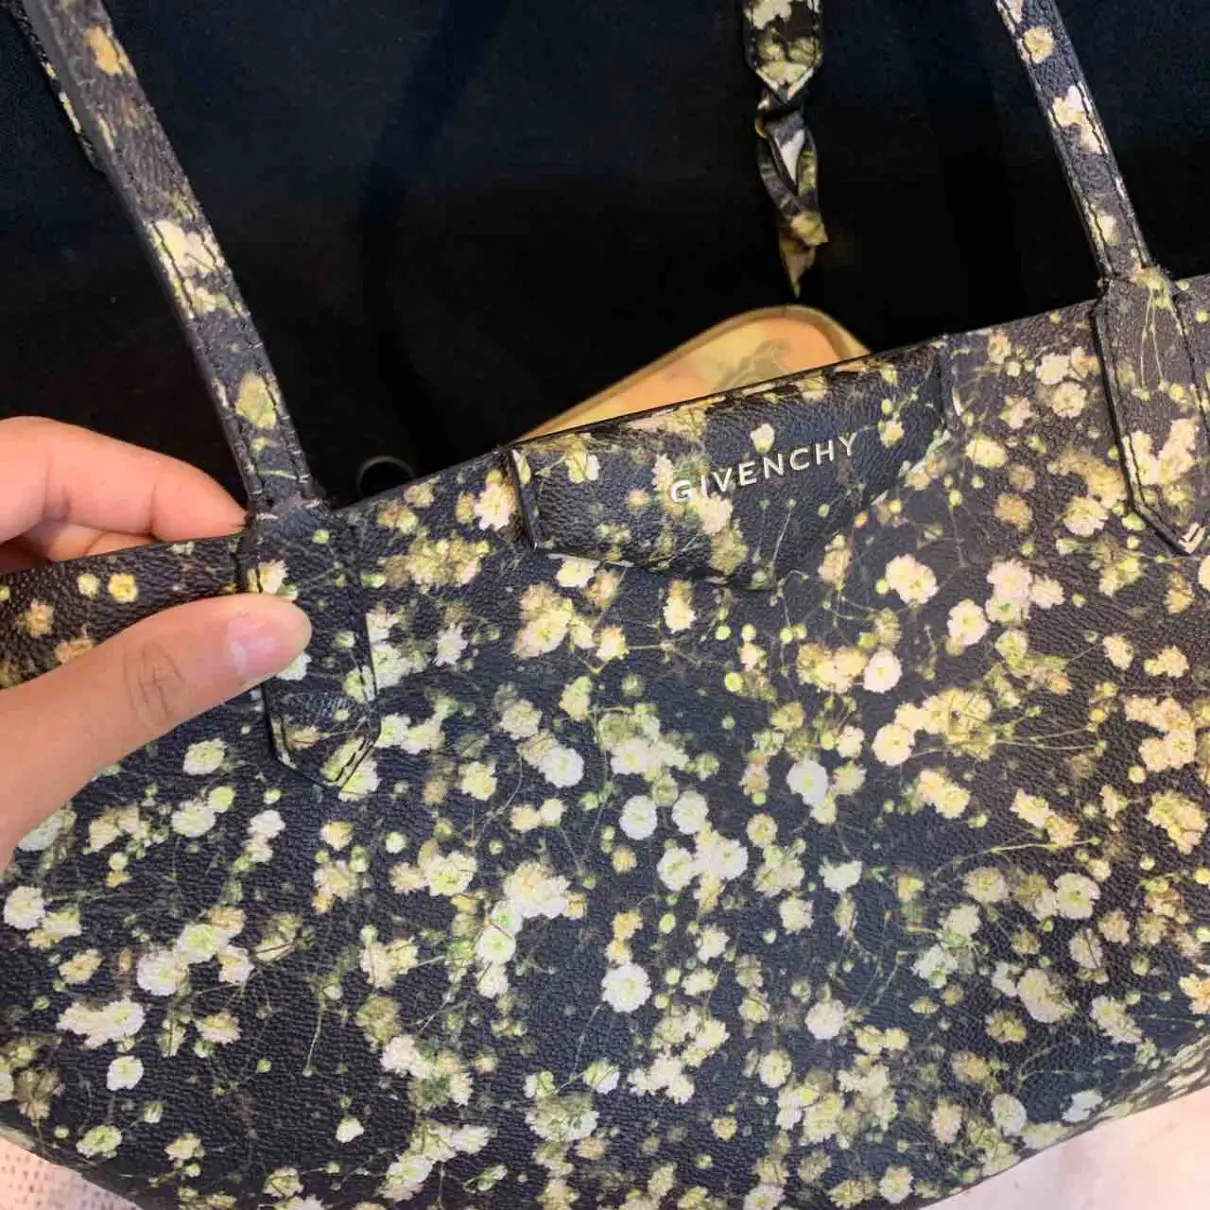 Luxury Givenchy Handbags Women